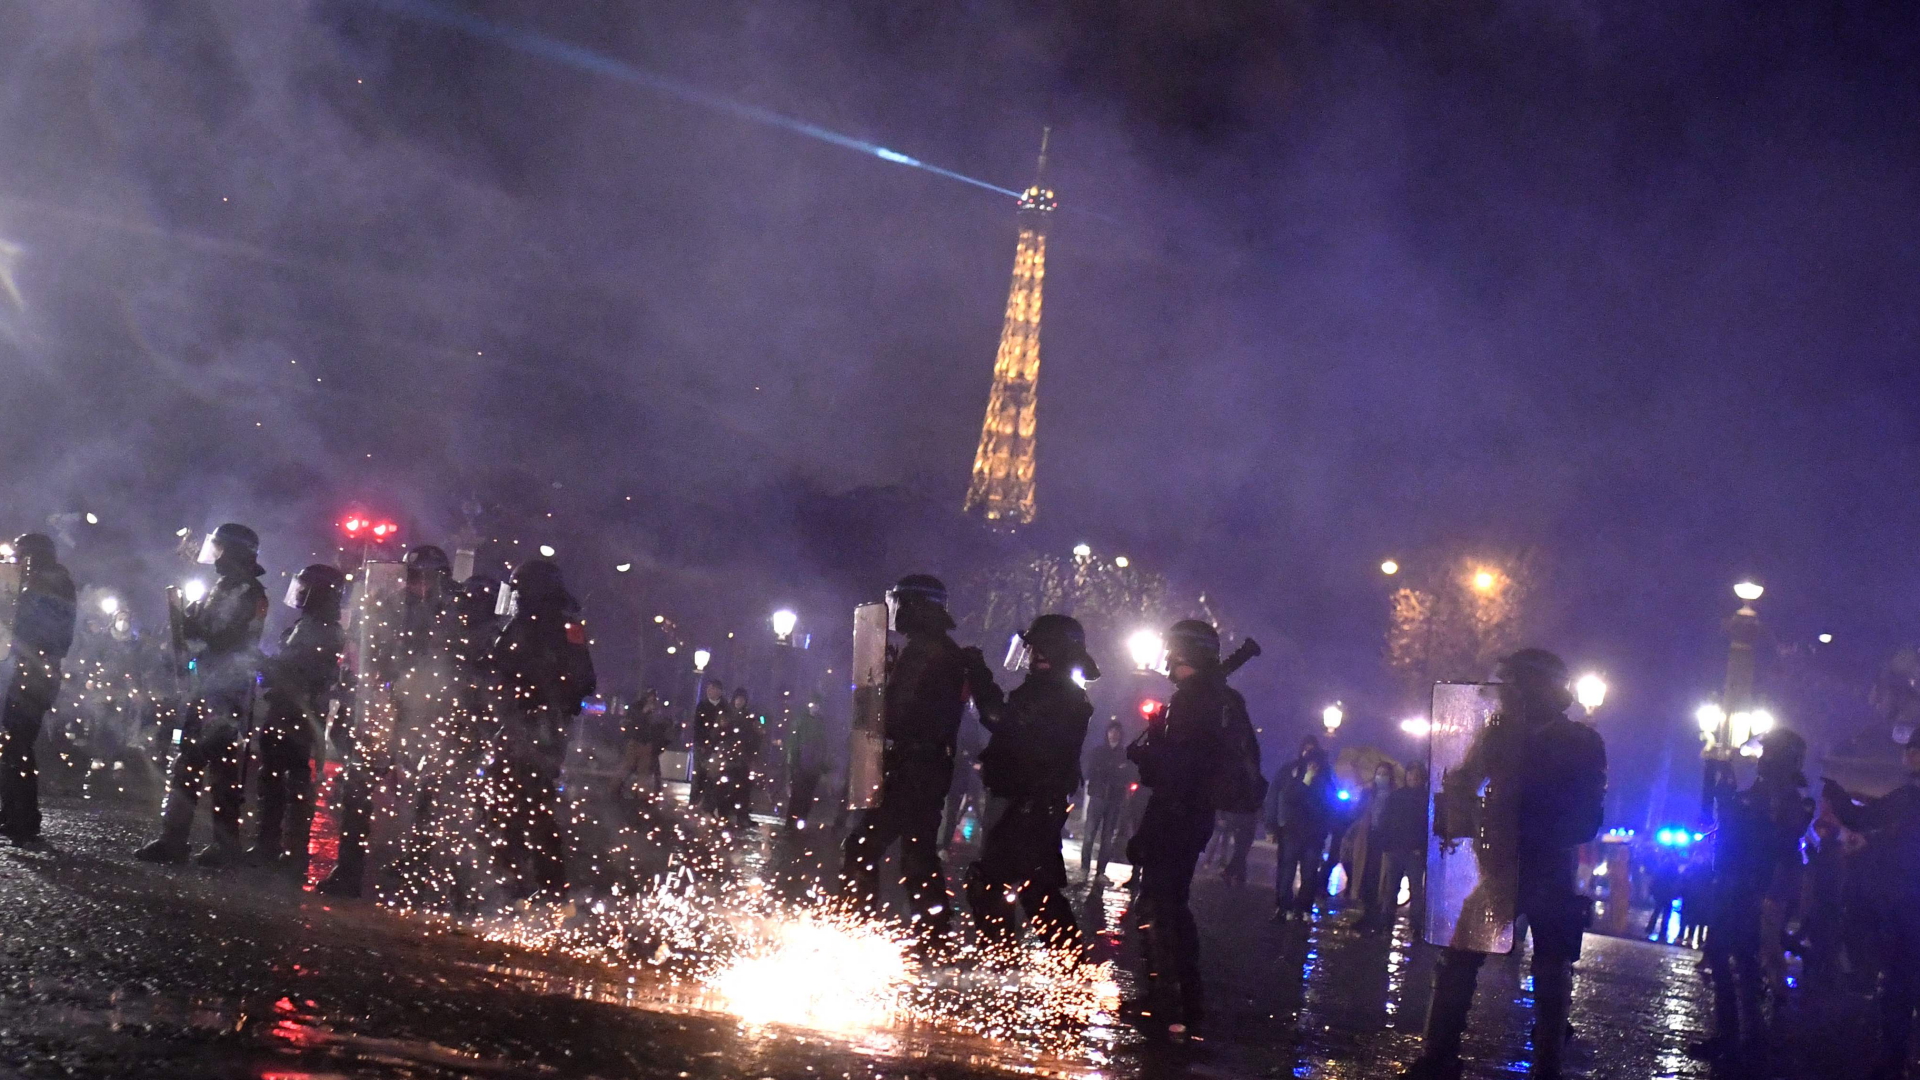 Macrons Rentenreform: Erneute heftige Proteste in Paris